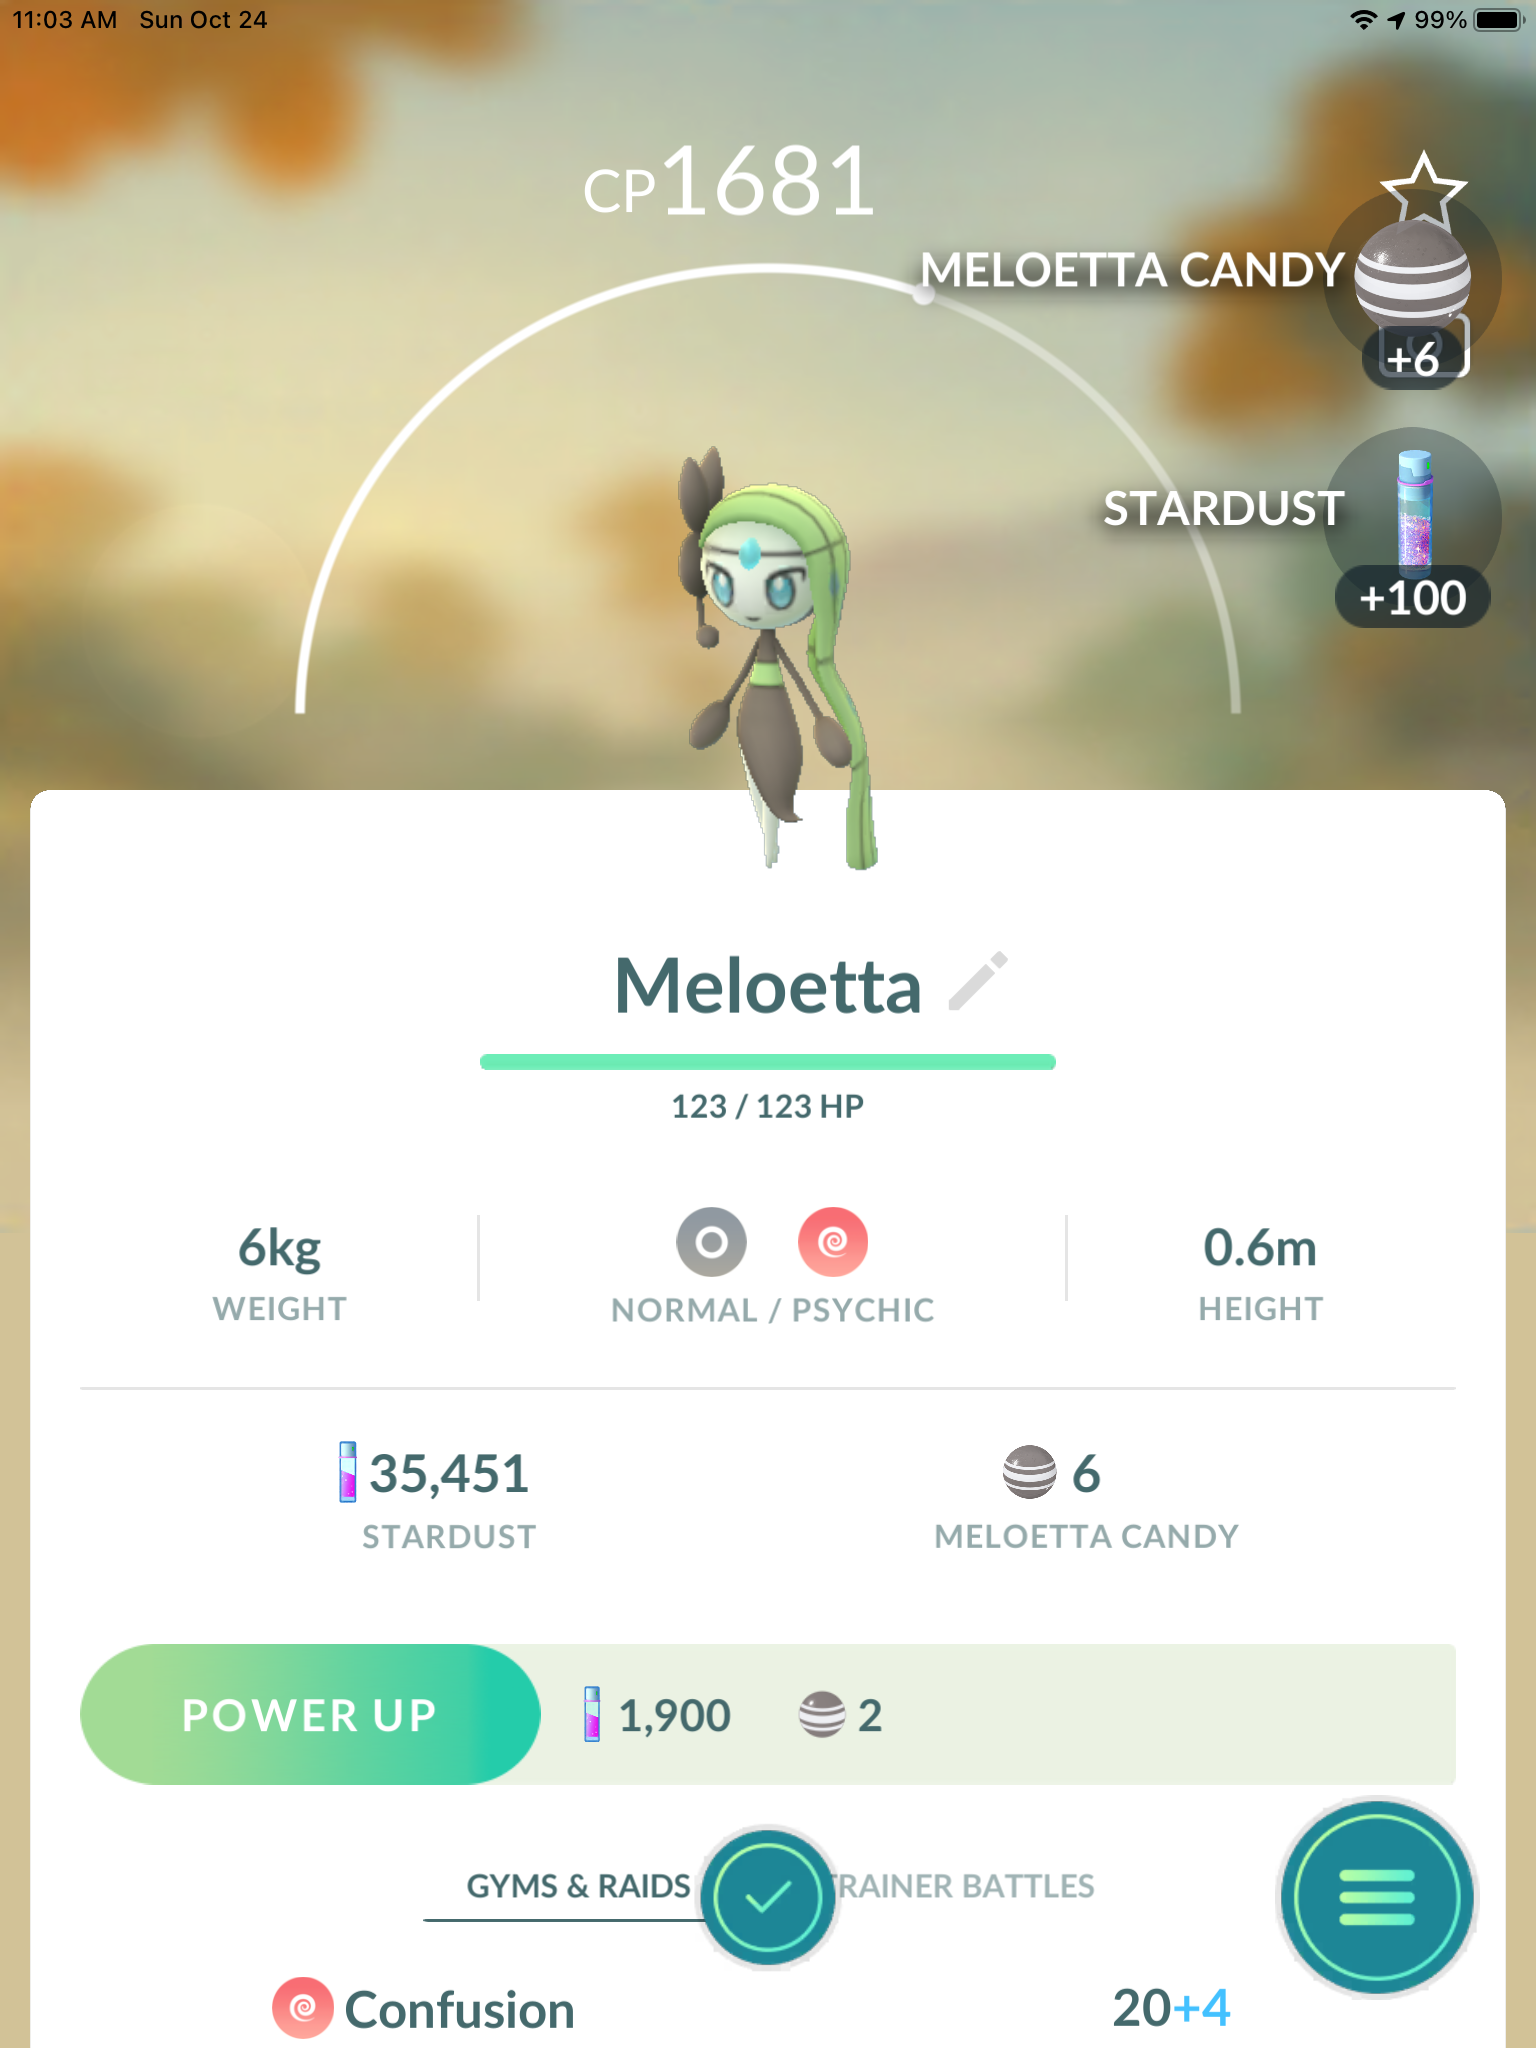 How to Get Meloetta In Pokémon Go